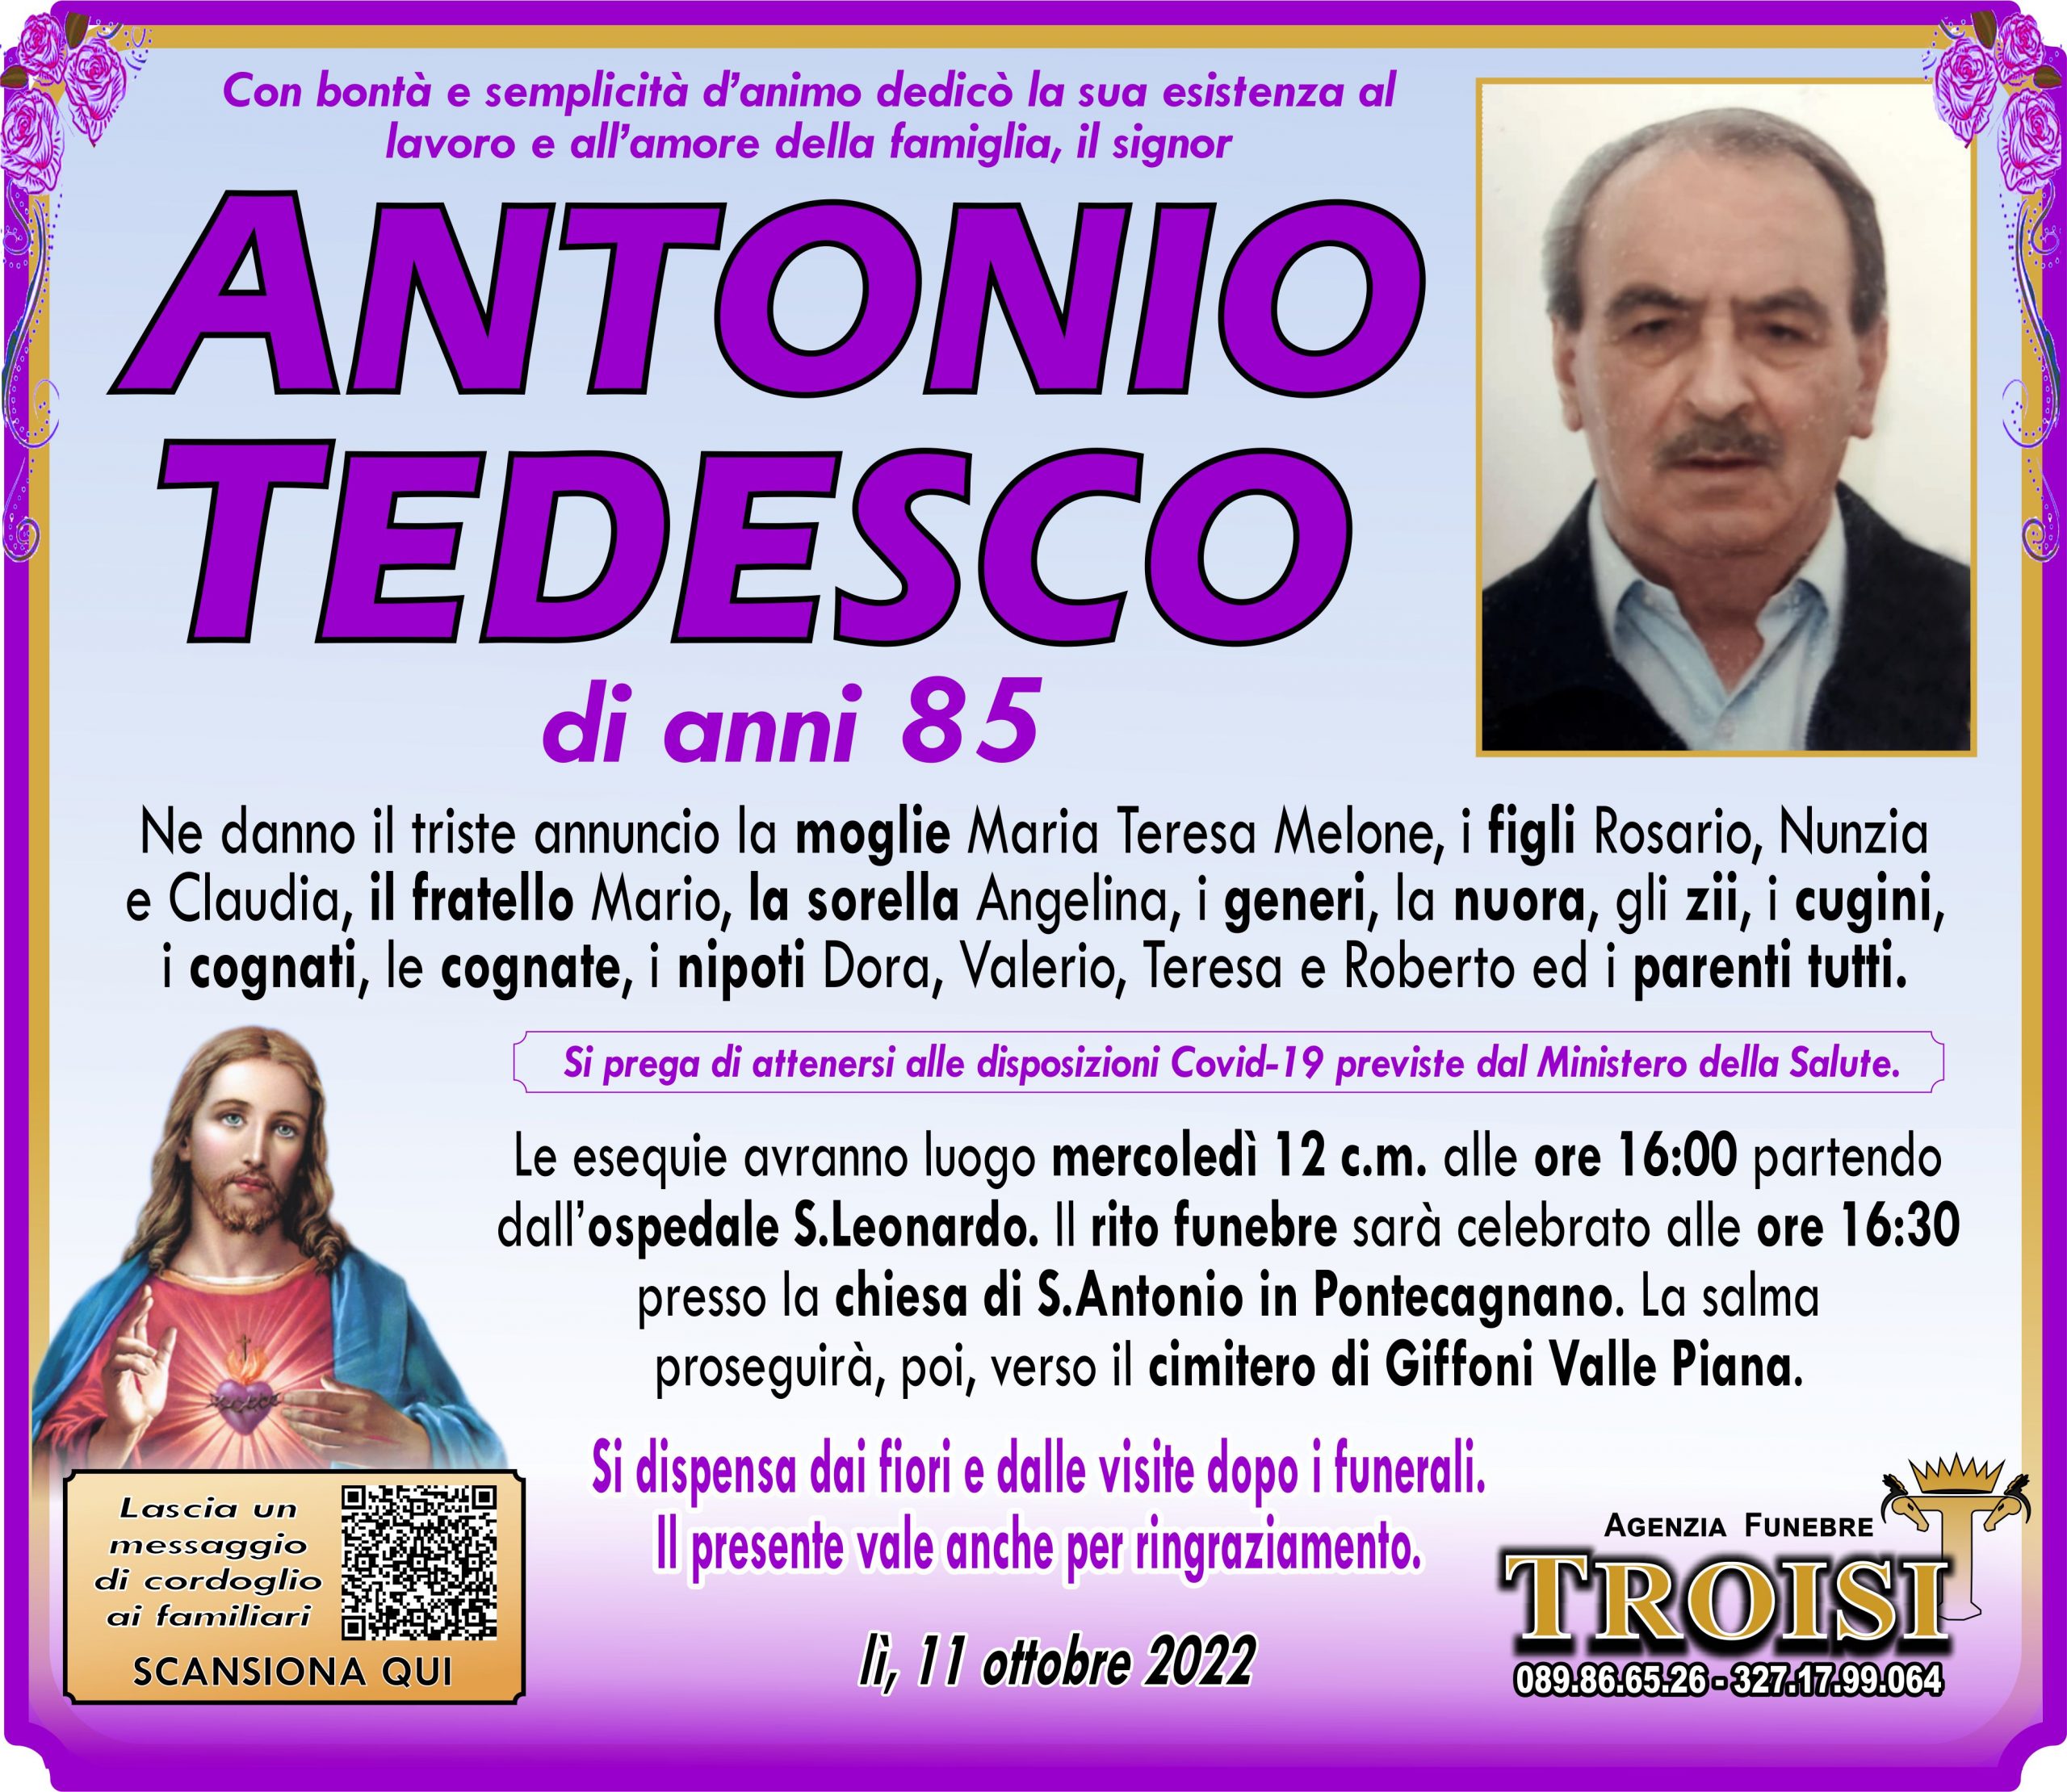 ANTONIO TEDESCO